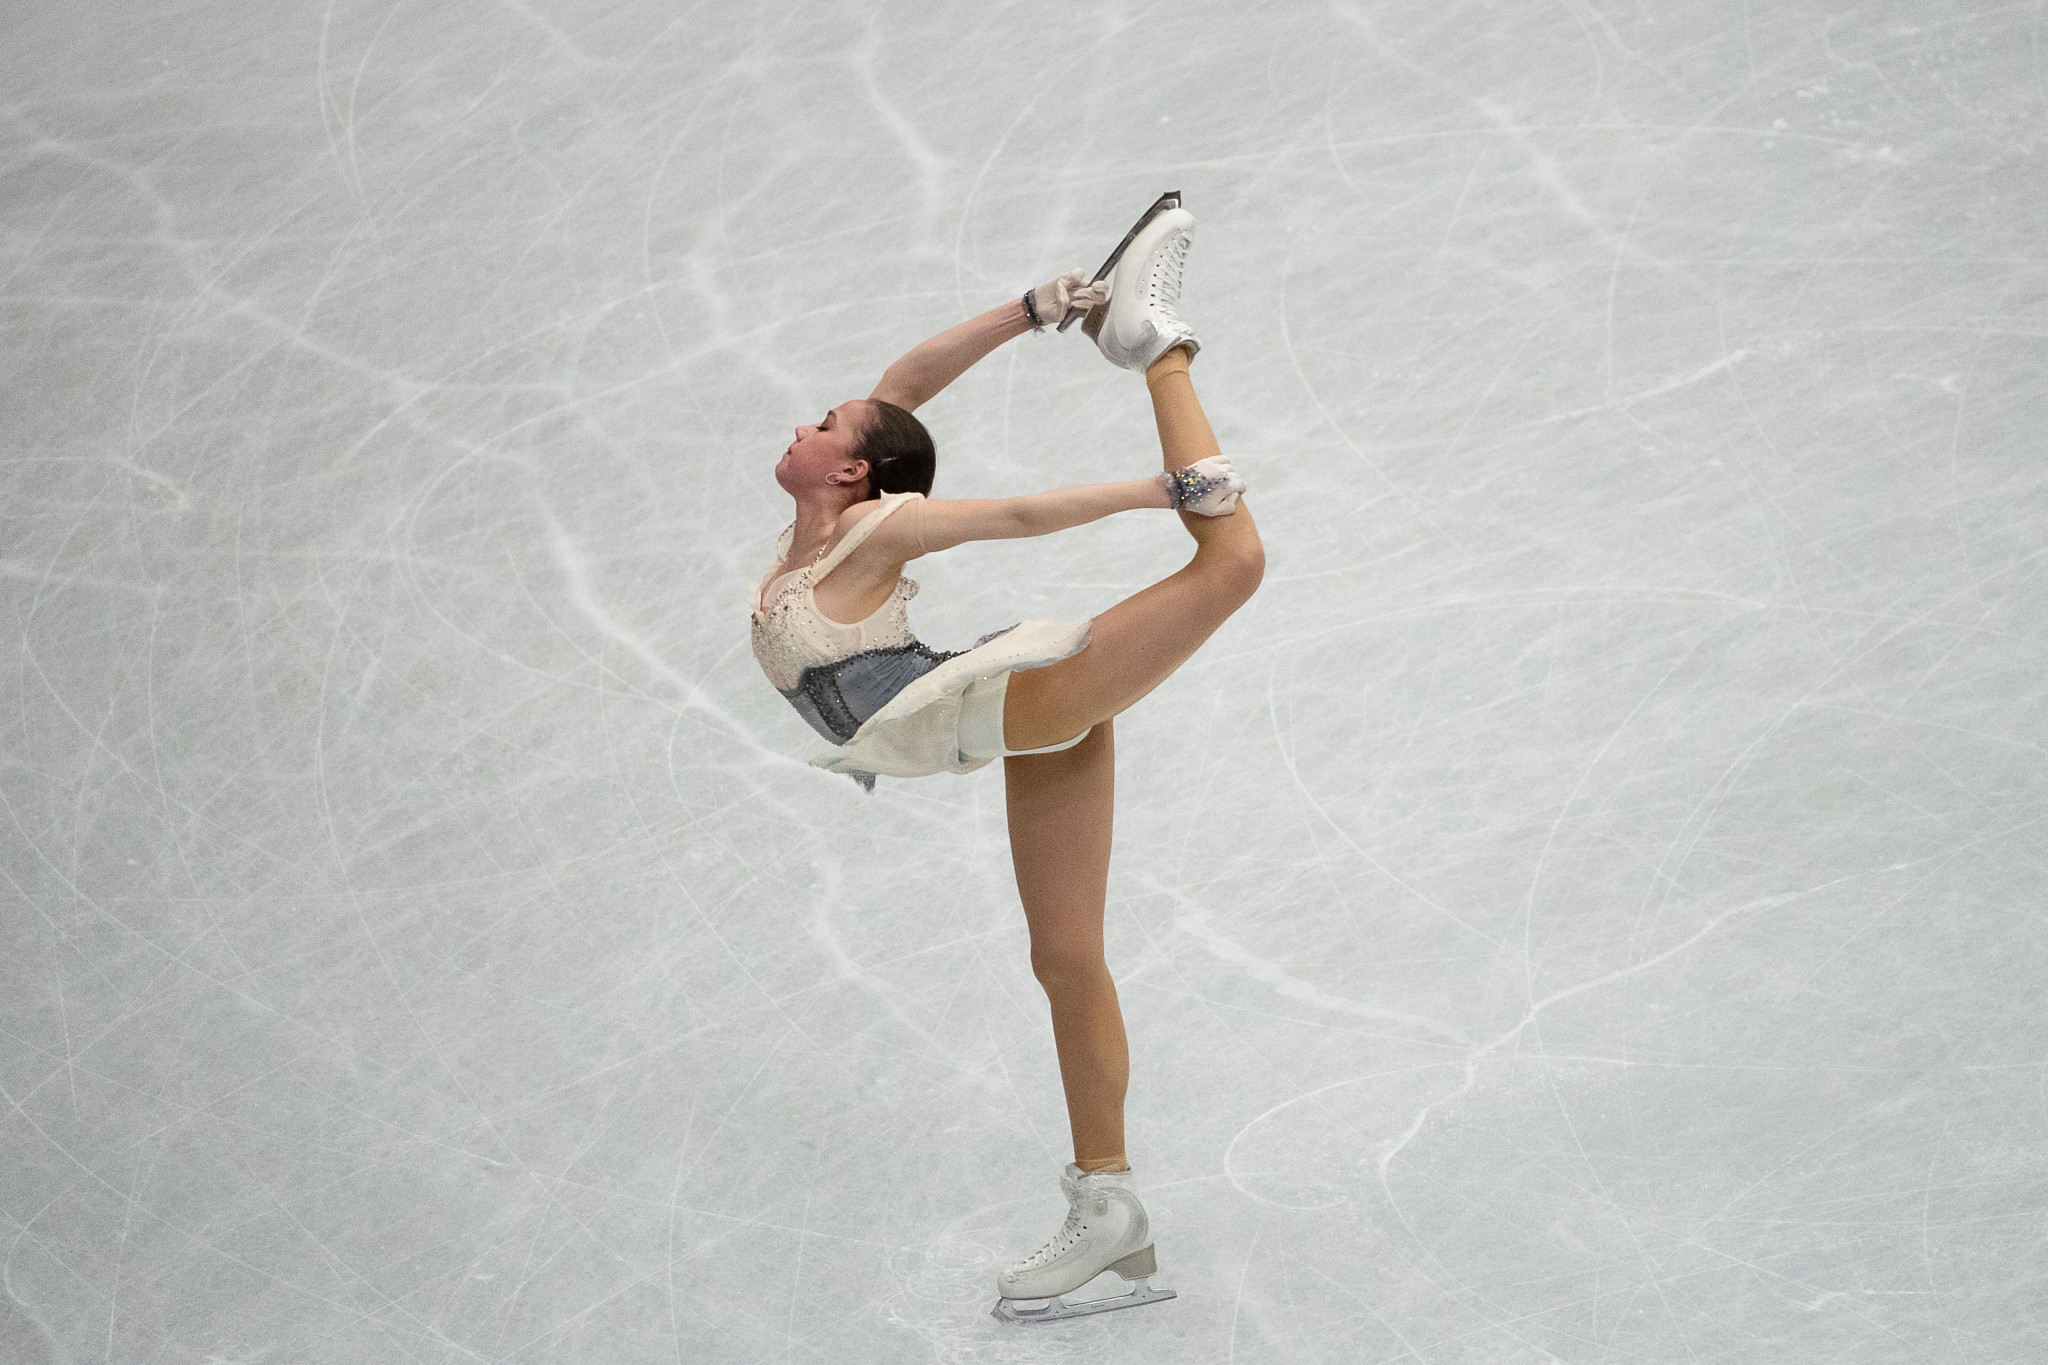 Alina Zagitova has claimed the lead in Saitama ©Getty Images